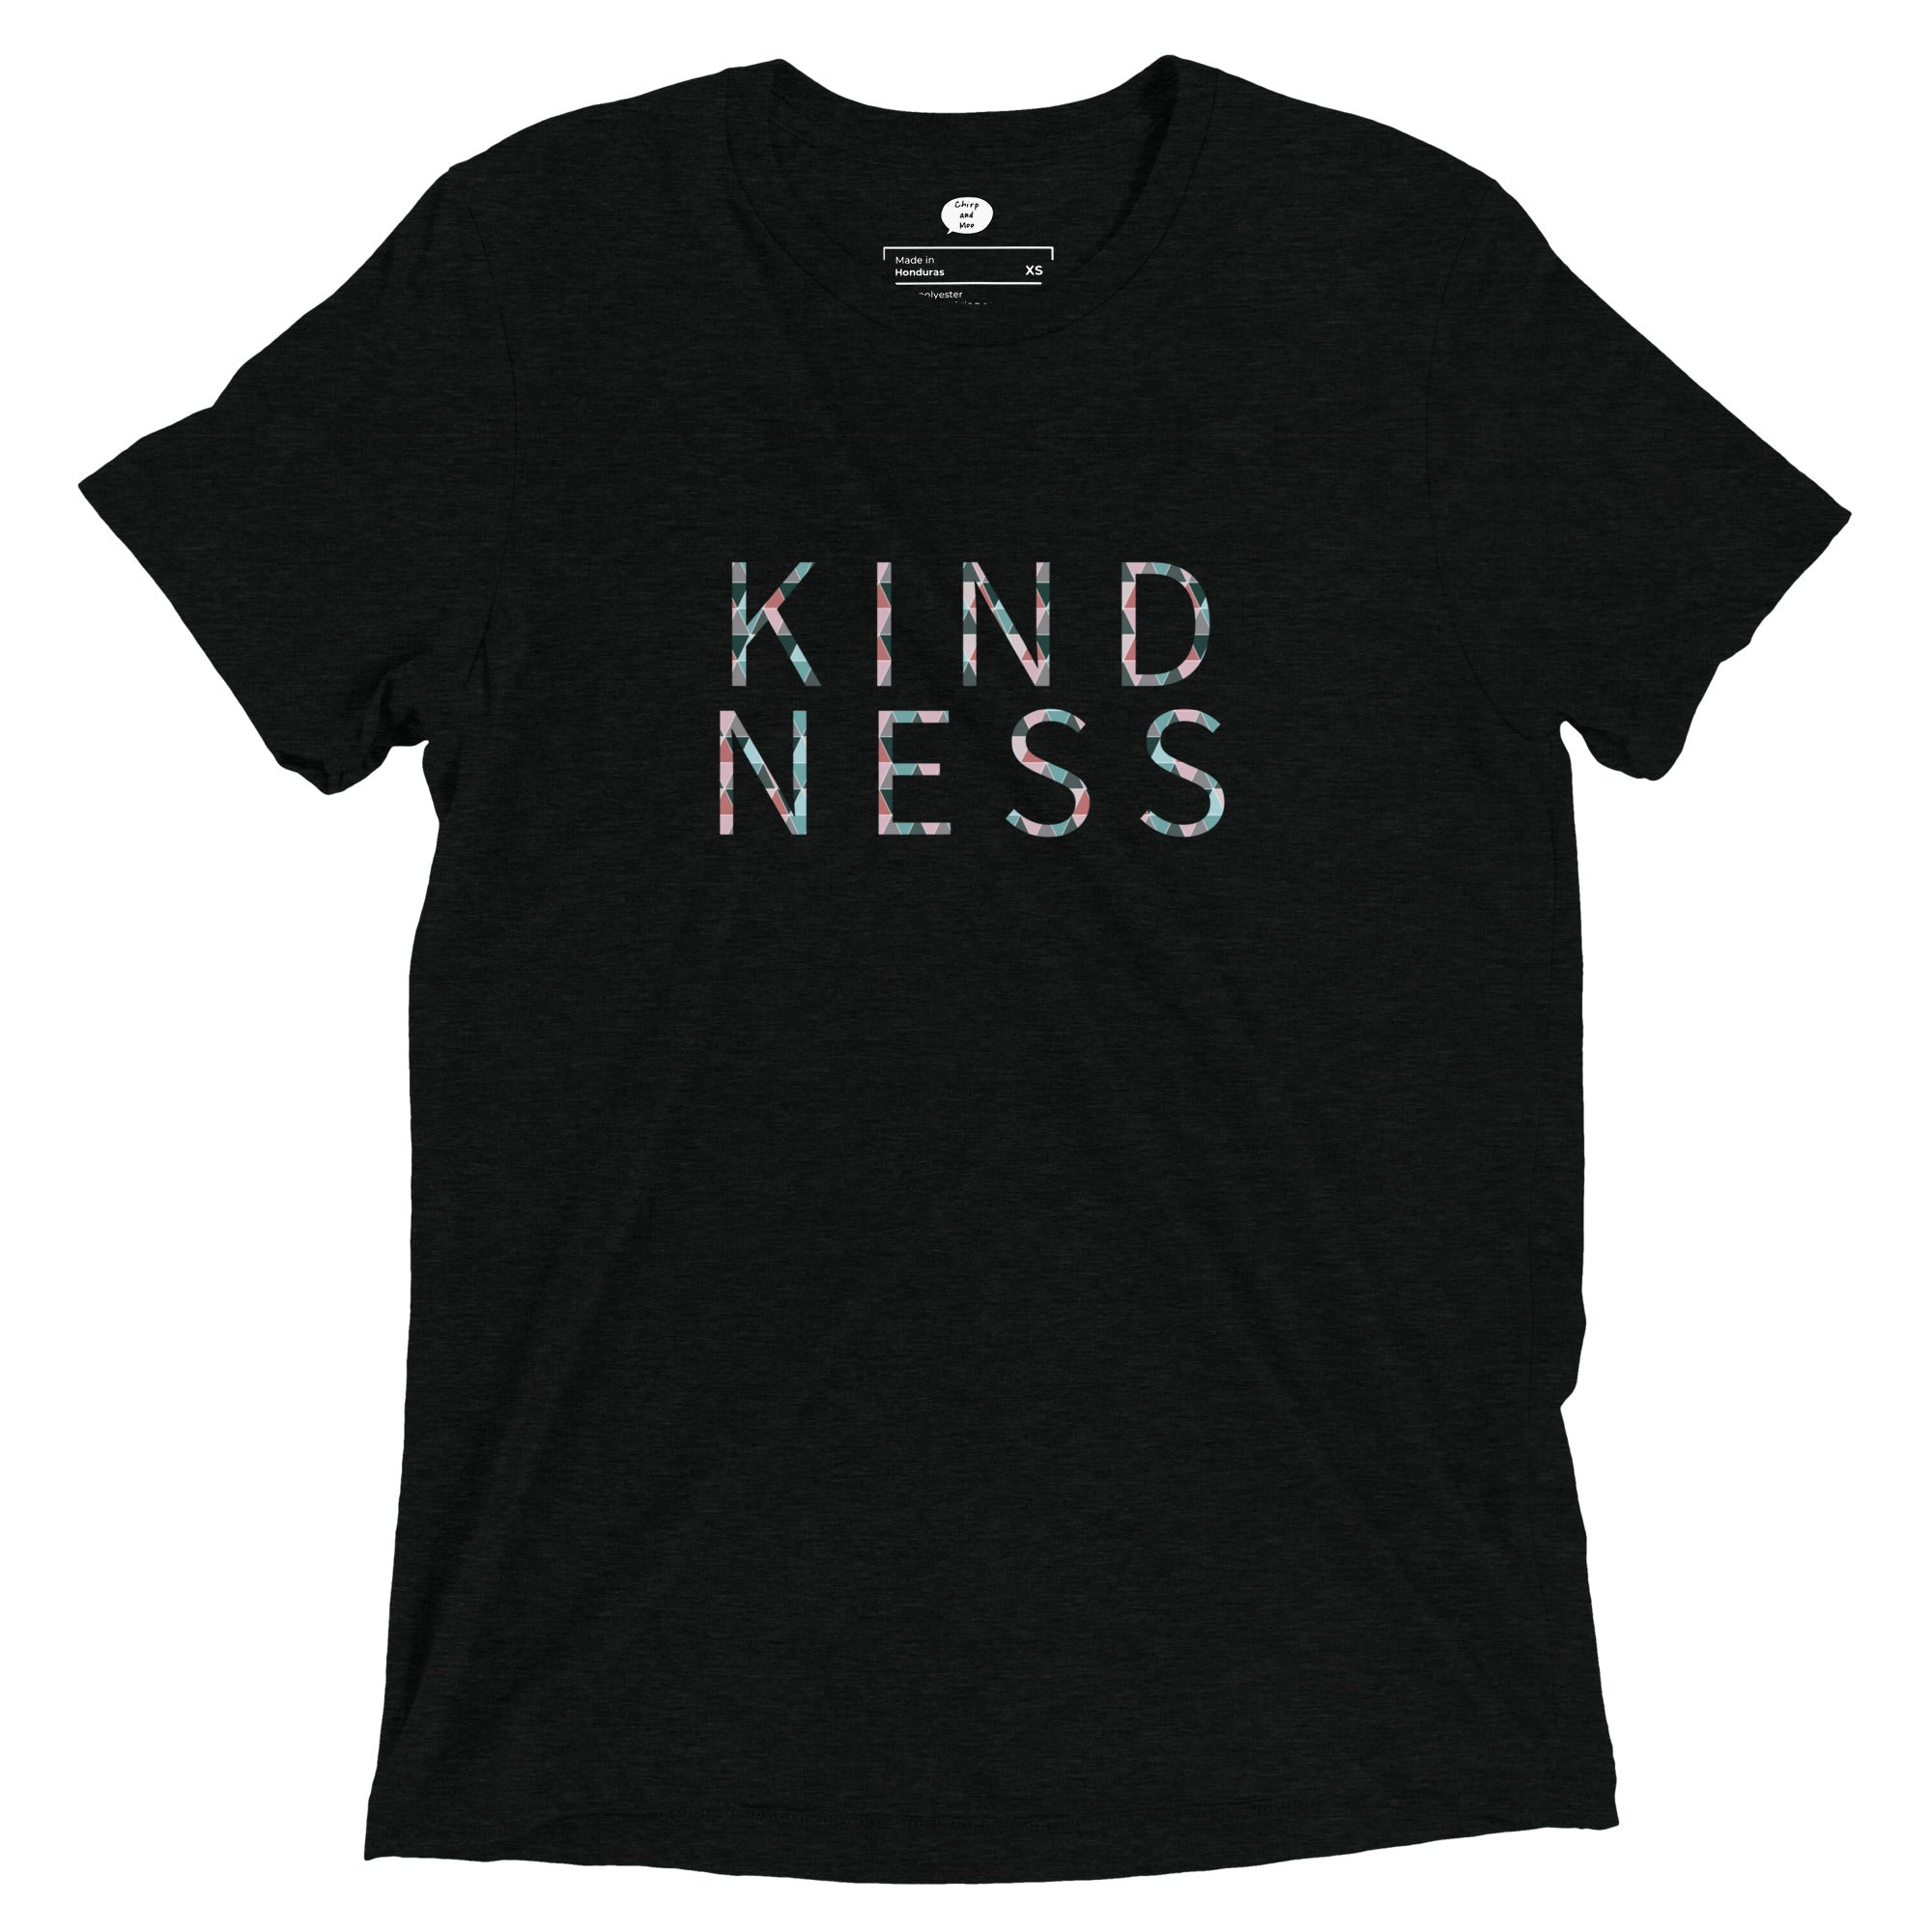 Kindness (Adult Unisex t-shirt)